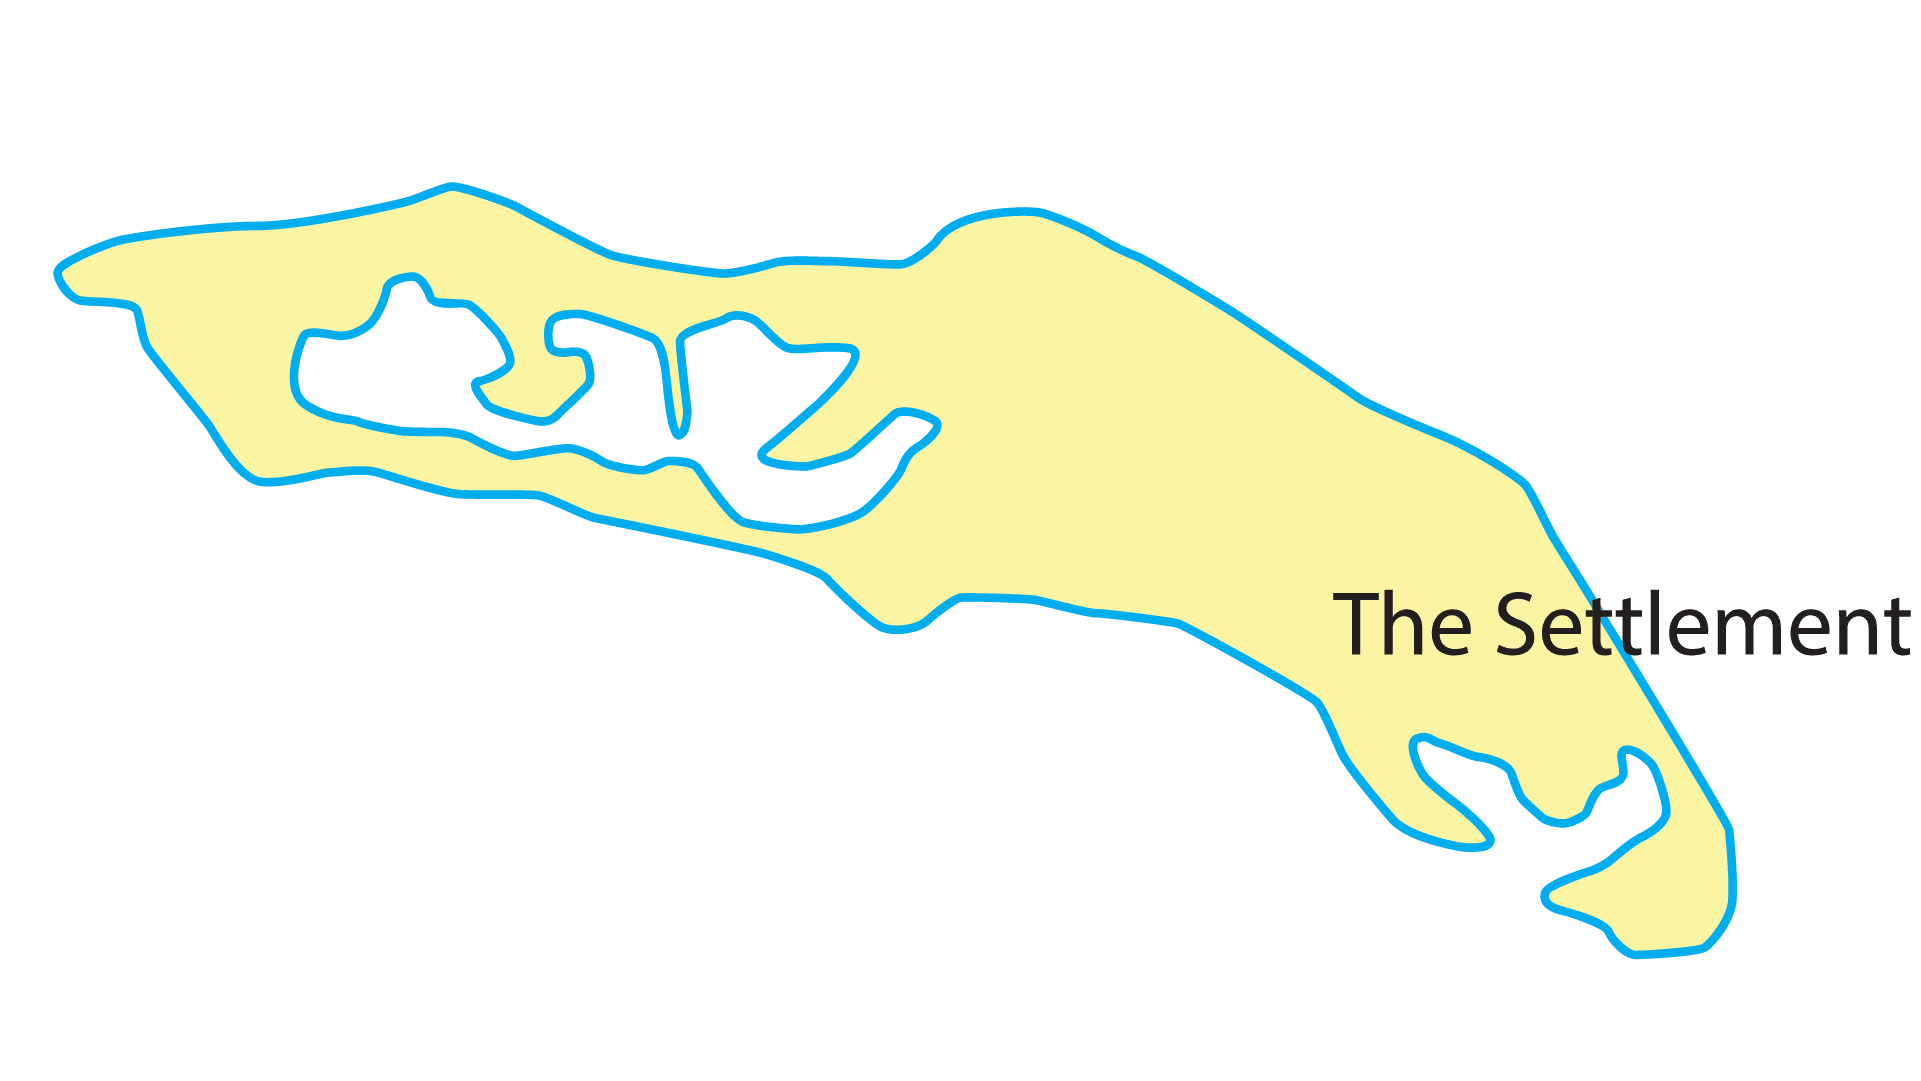 Map rendering of Anegada Island